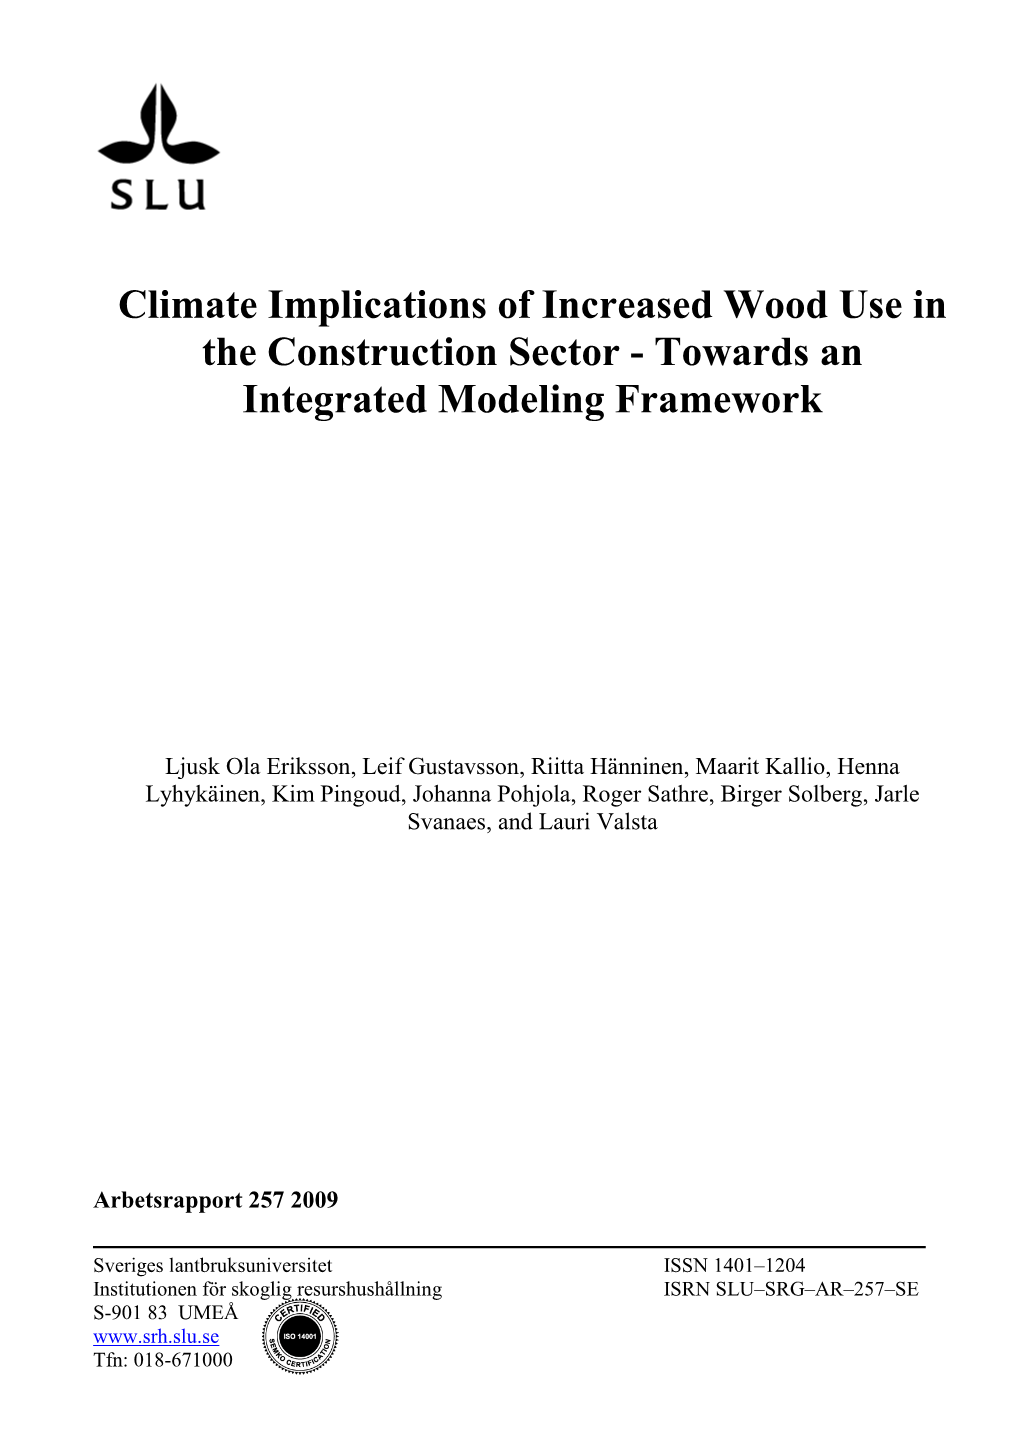 Towards an Integrated Modeling Framework